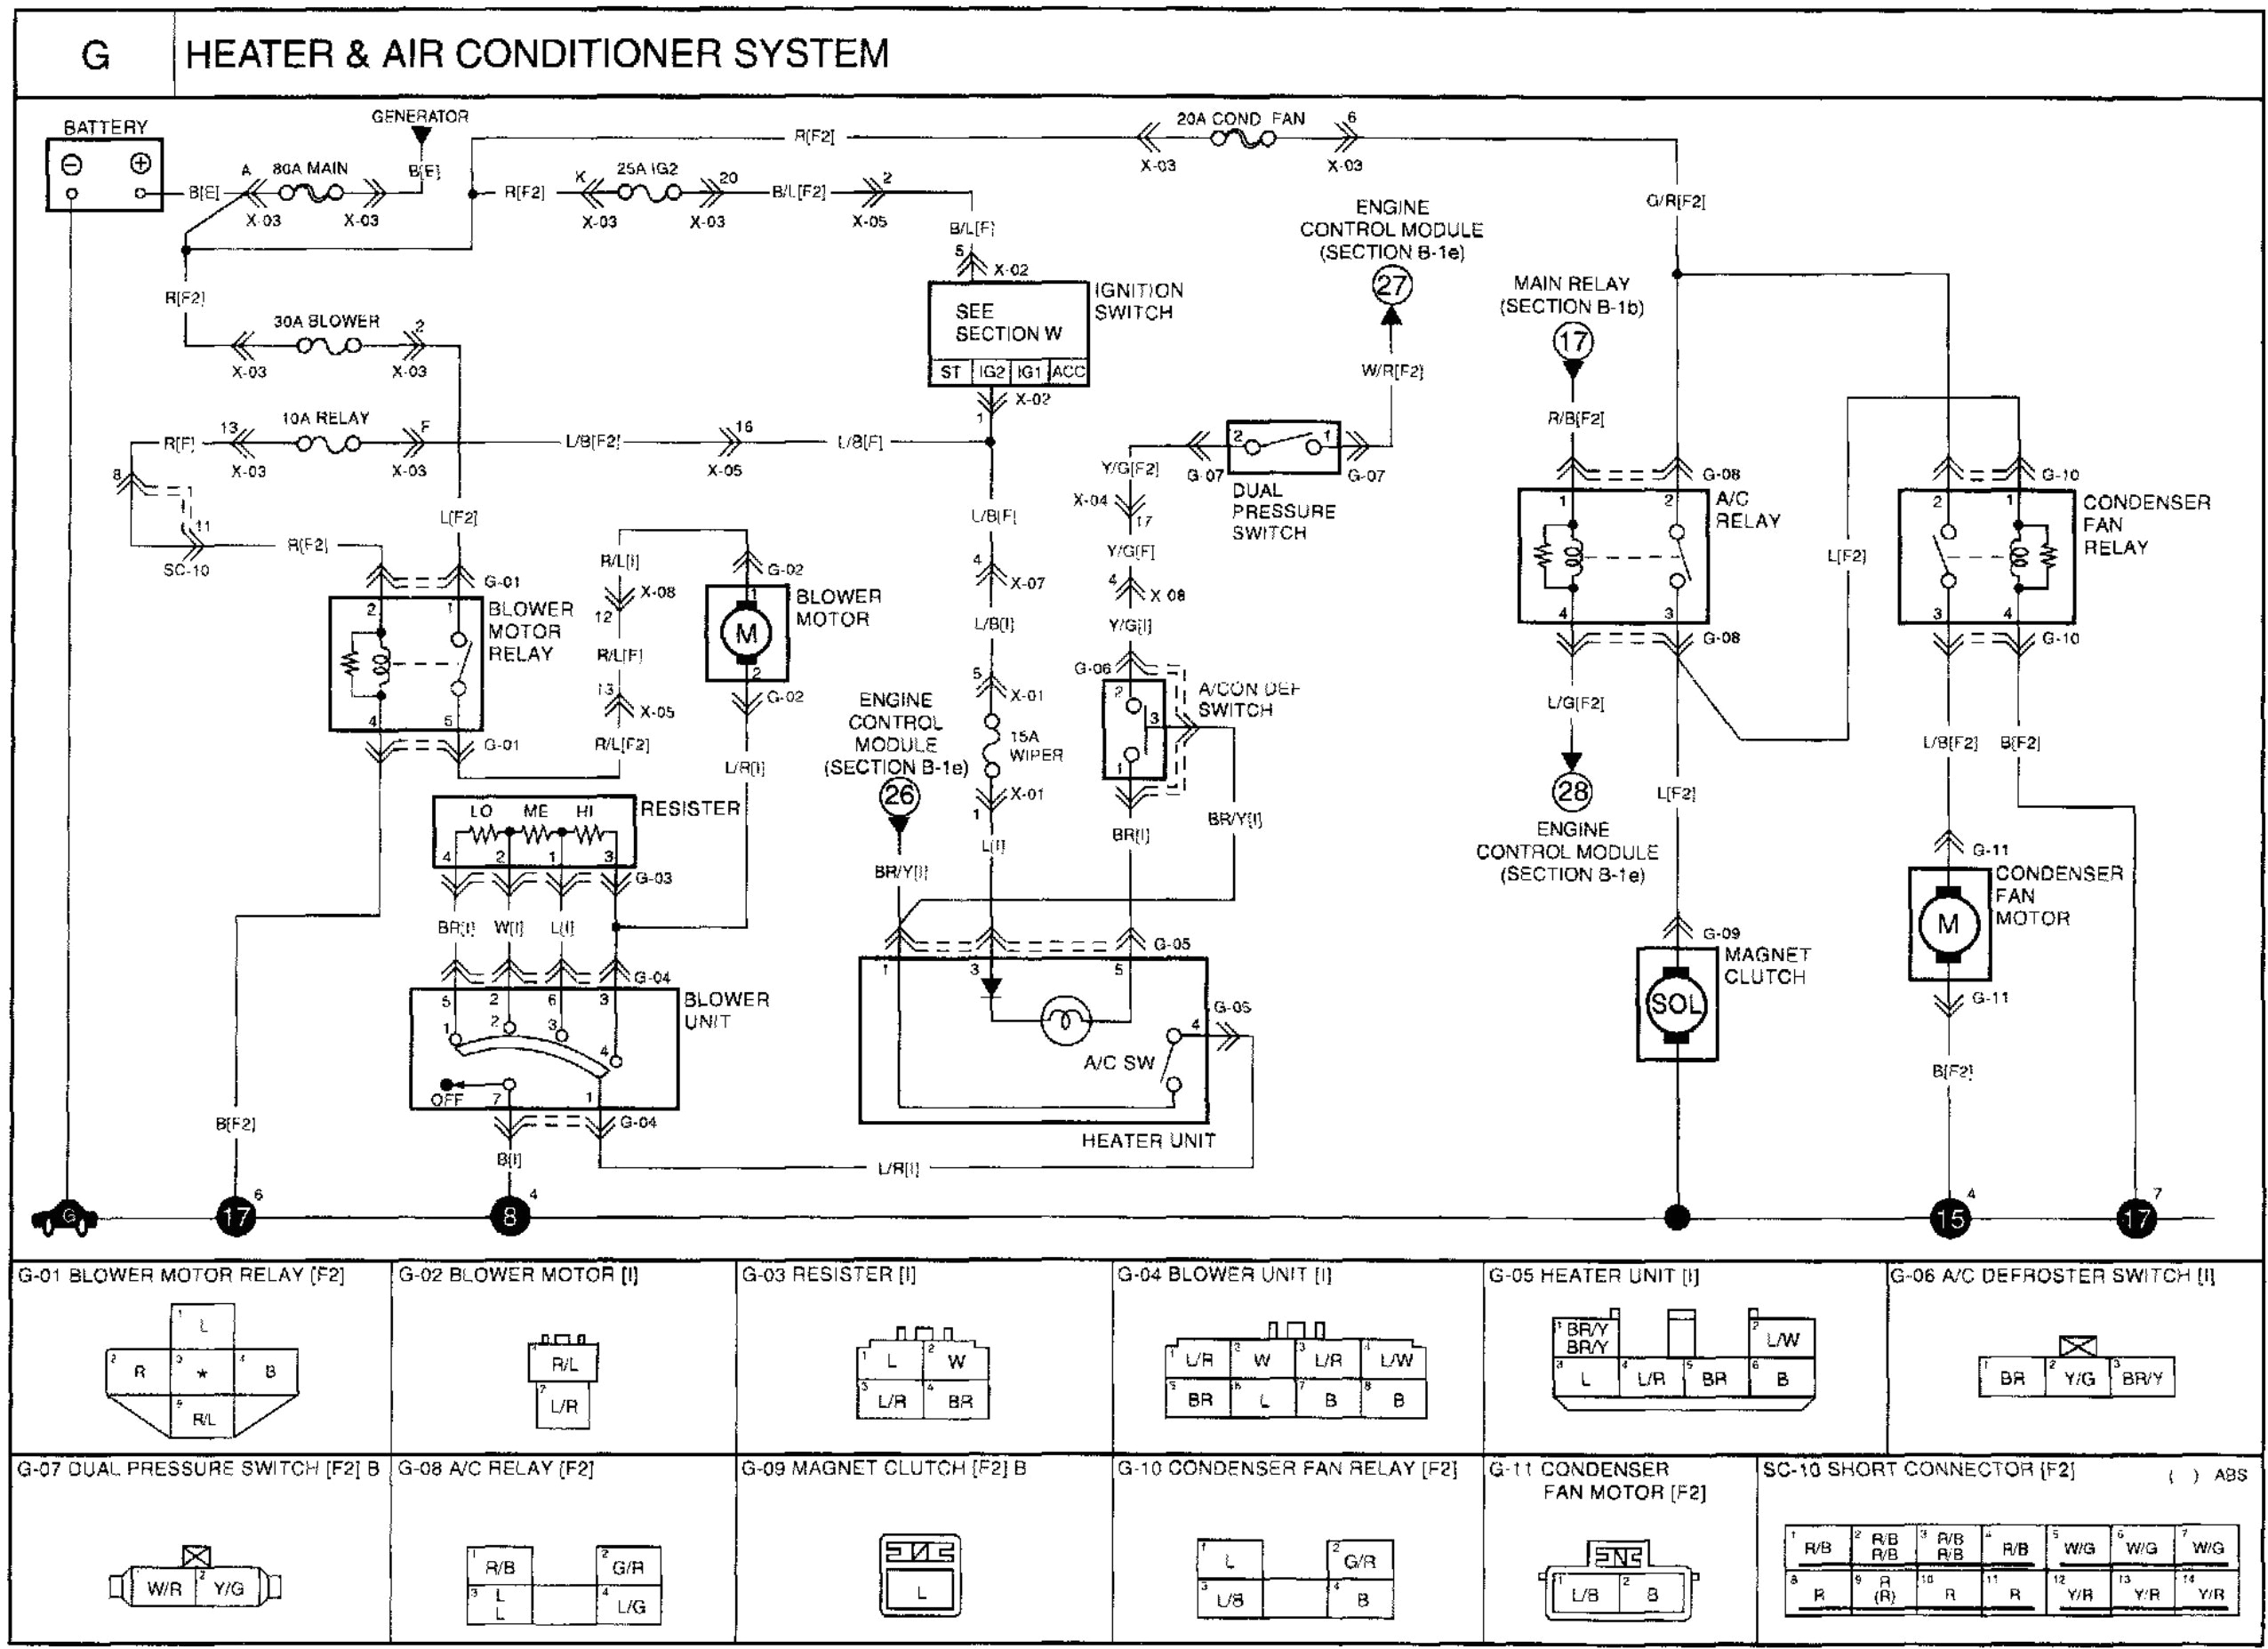 2002 kia spectra engine diagram 250 ignition wiring diagram 2002 kia rio engine diagram chevy fuel of 2002 kia spectra engine diagram jpg